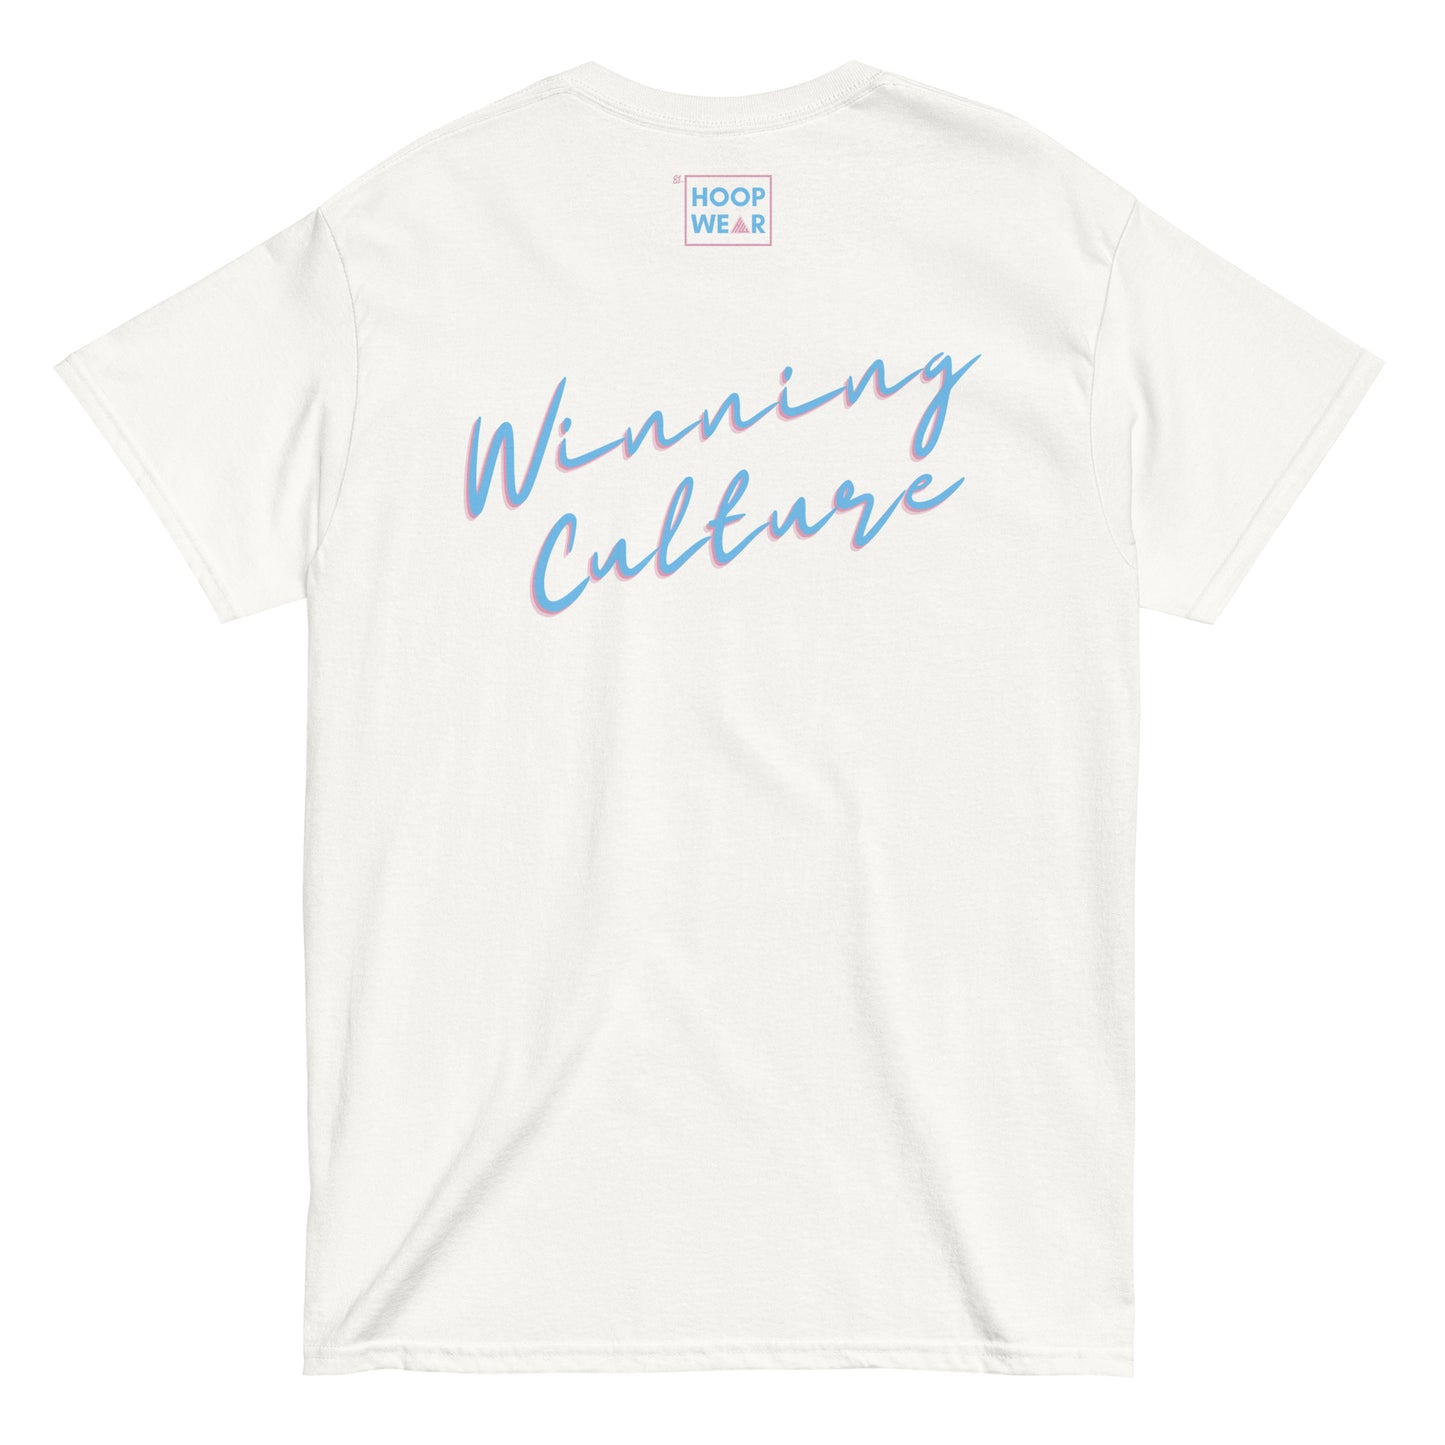 “Winning Culture” T-shirt - White